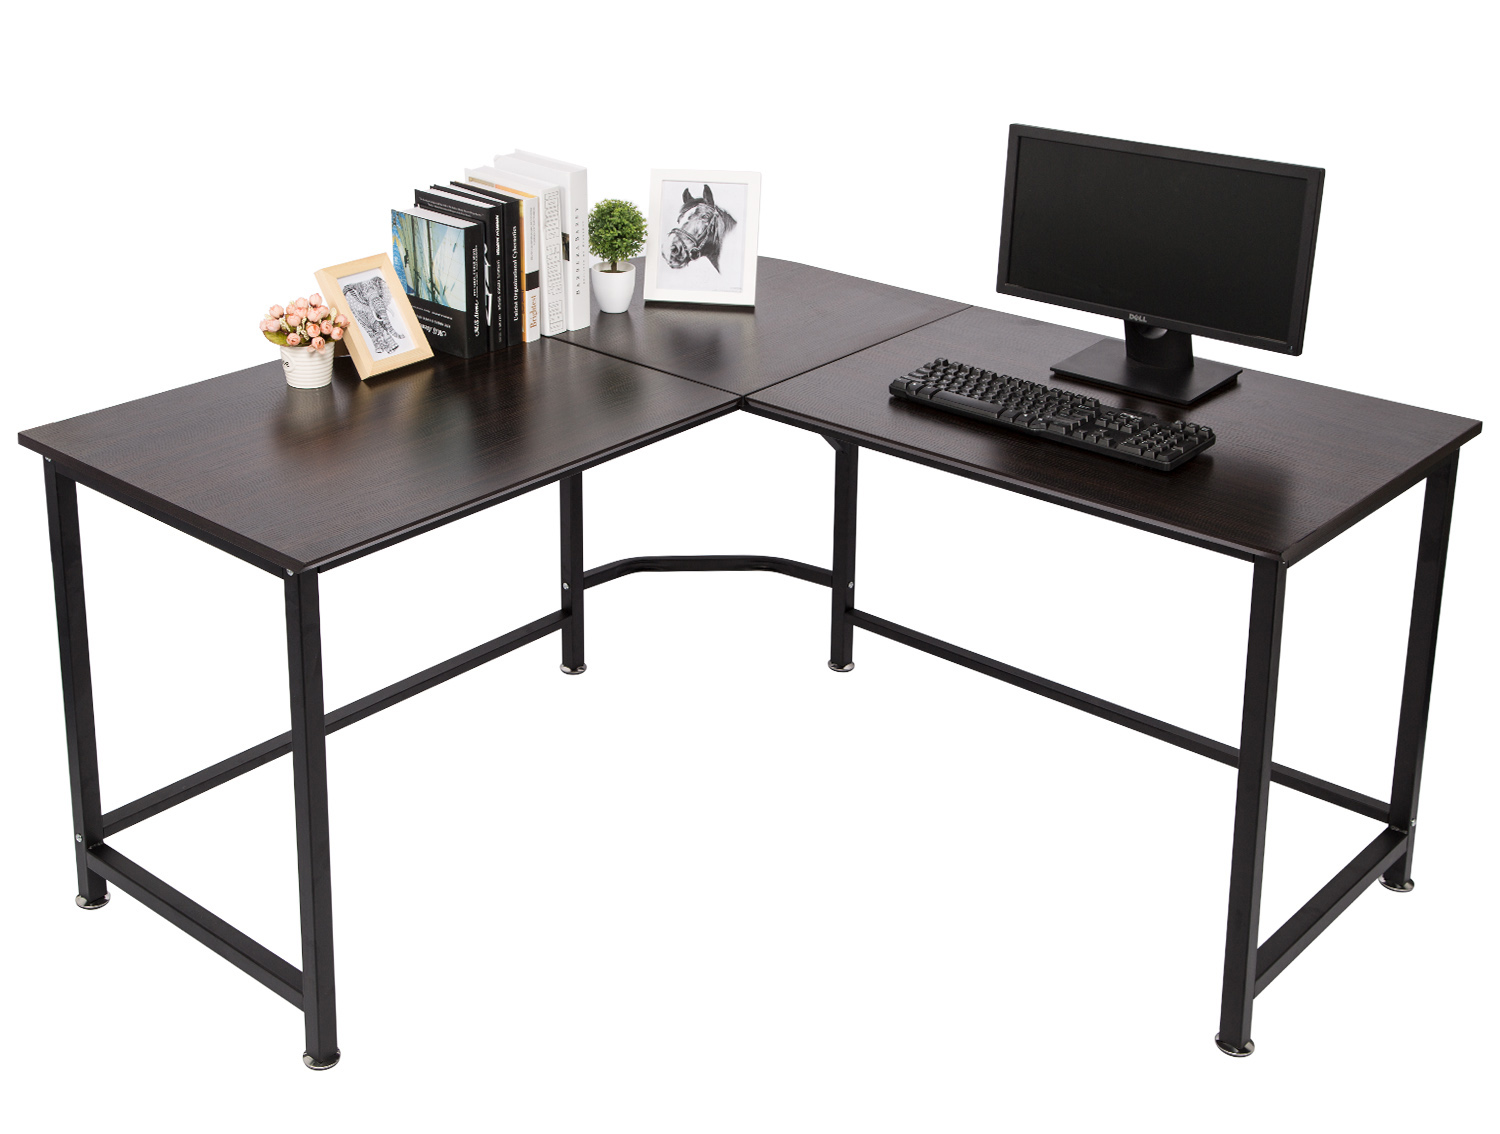 TOPSKY 59" x 59" with 23.6" Deep L-Shaped Desk Corner Computer Desk Bevel Edge Design S-203B